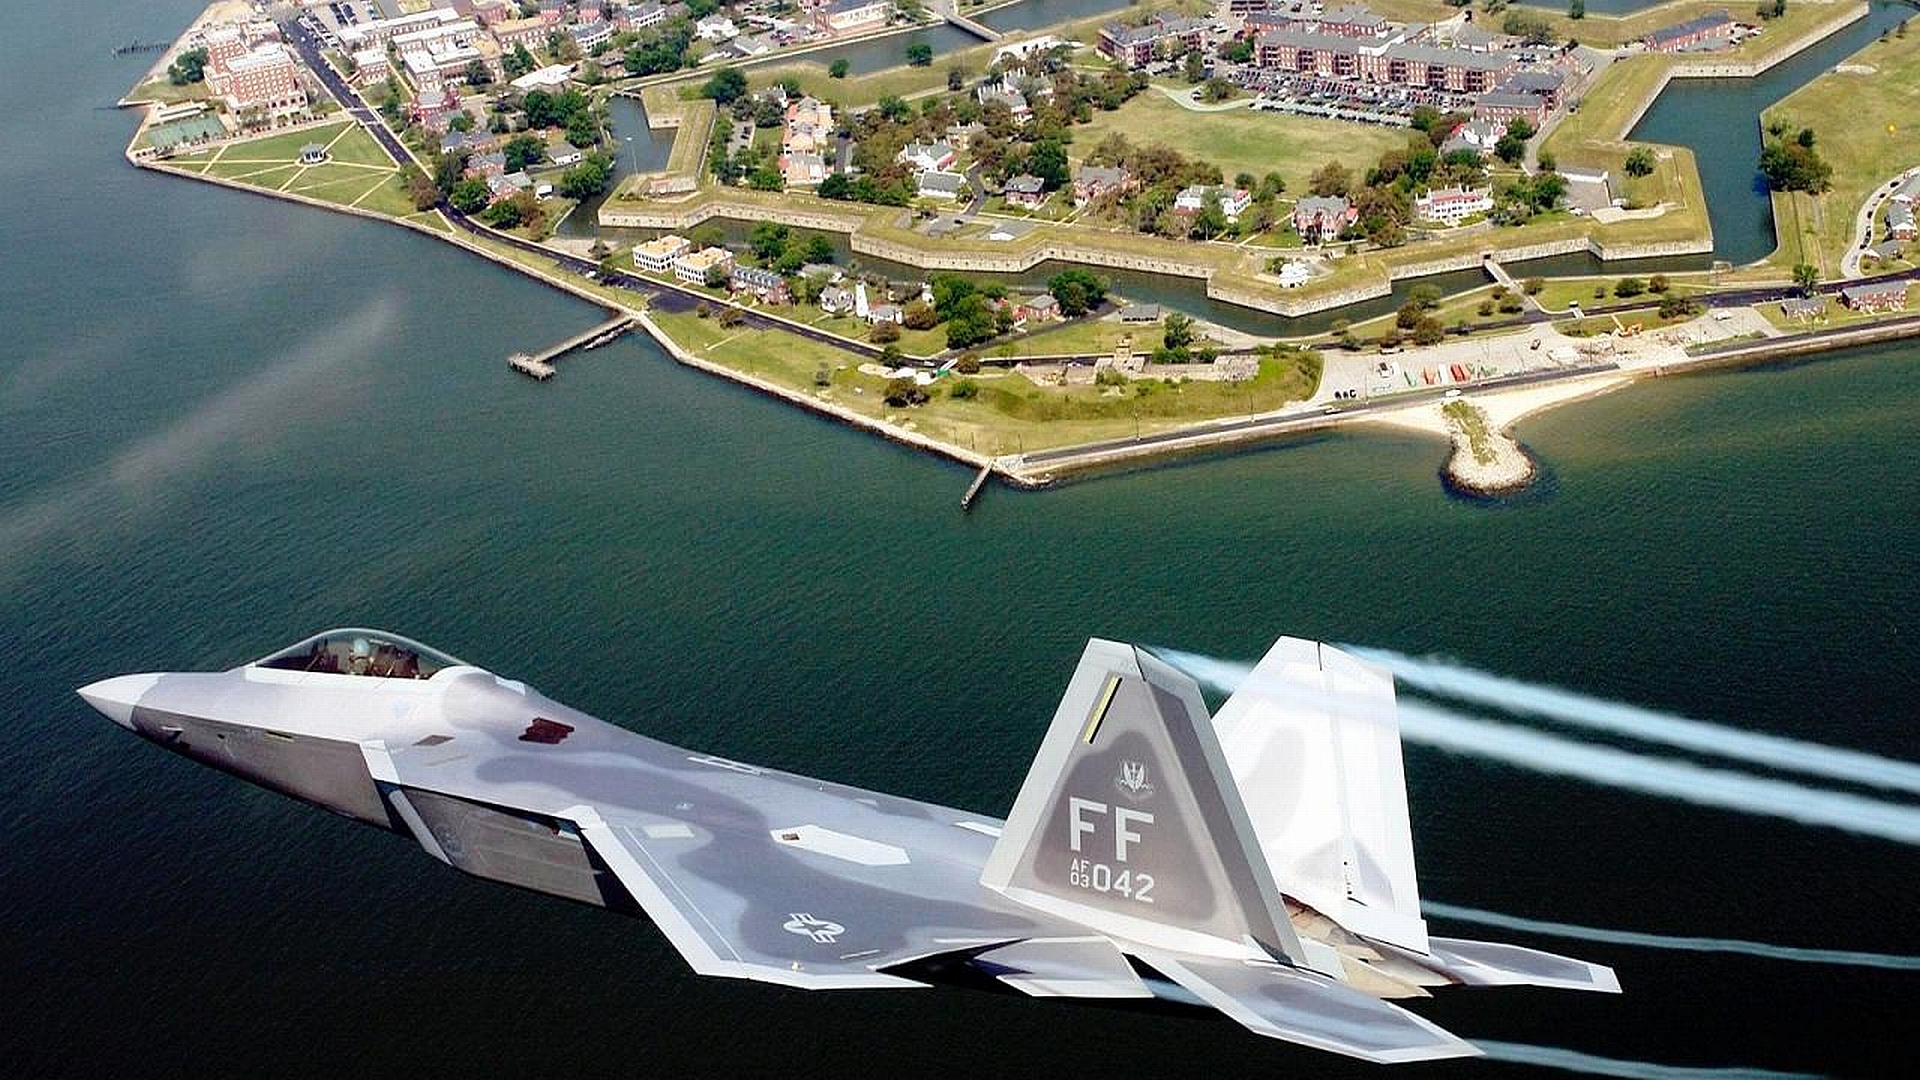 Free download wallpaper Military, Lockheed Martin F 22 Raptor on your PC desktop